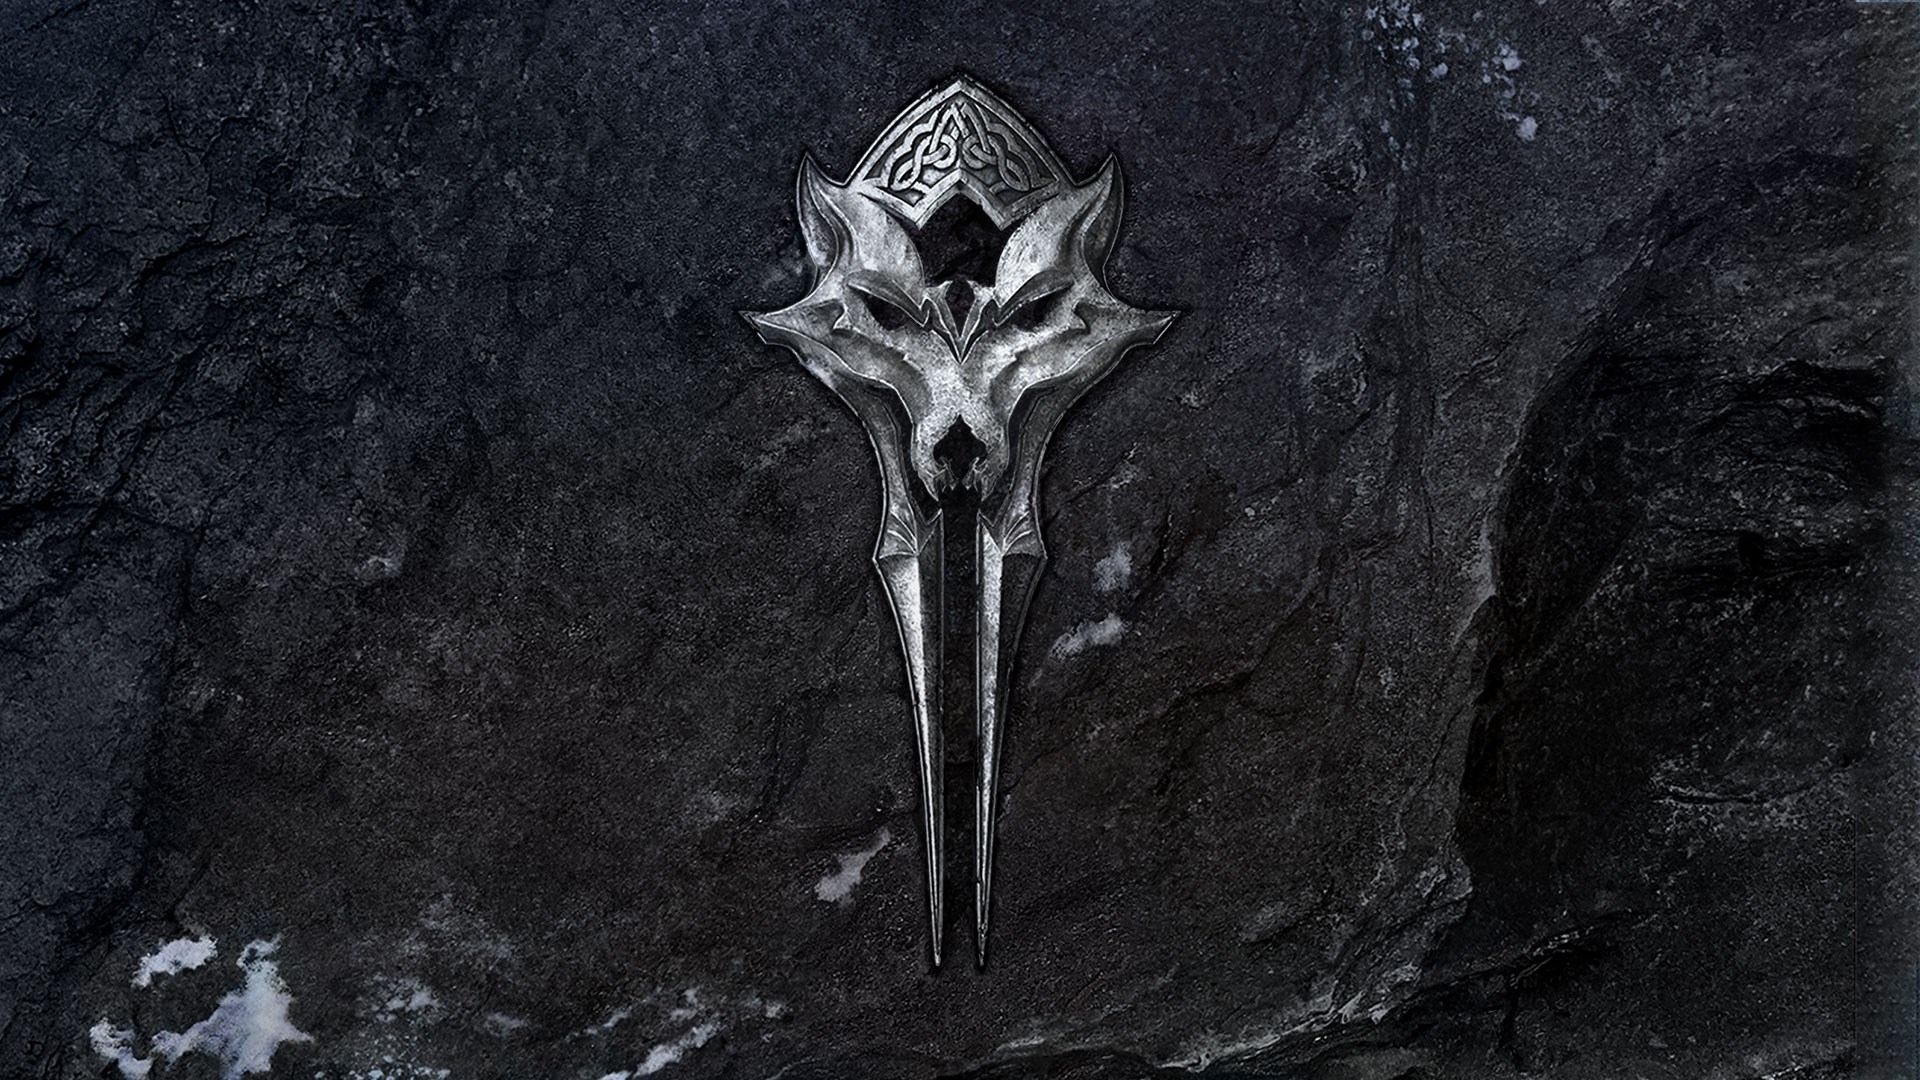 Necrom™ Upgrade - Product Details - The Elder Scrolls Online